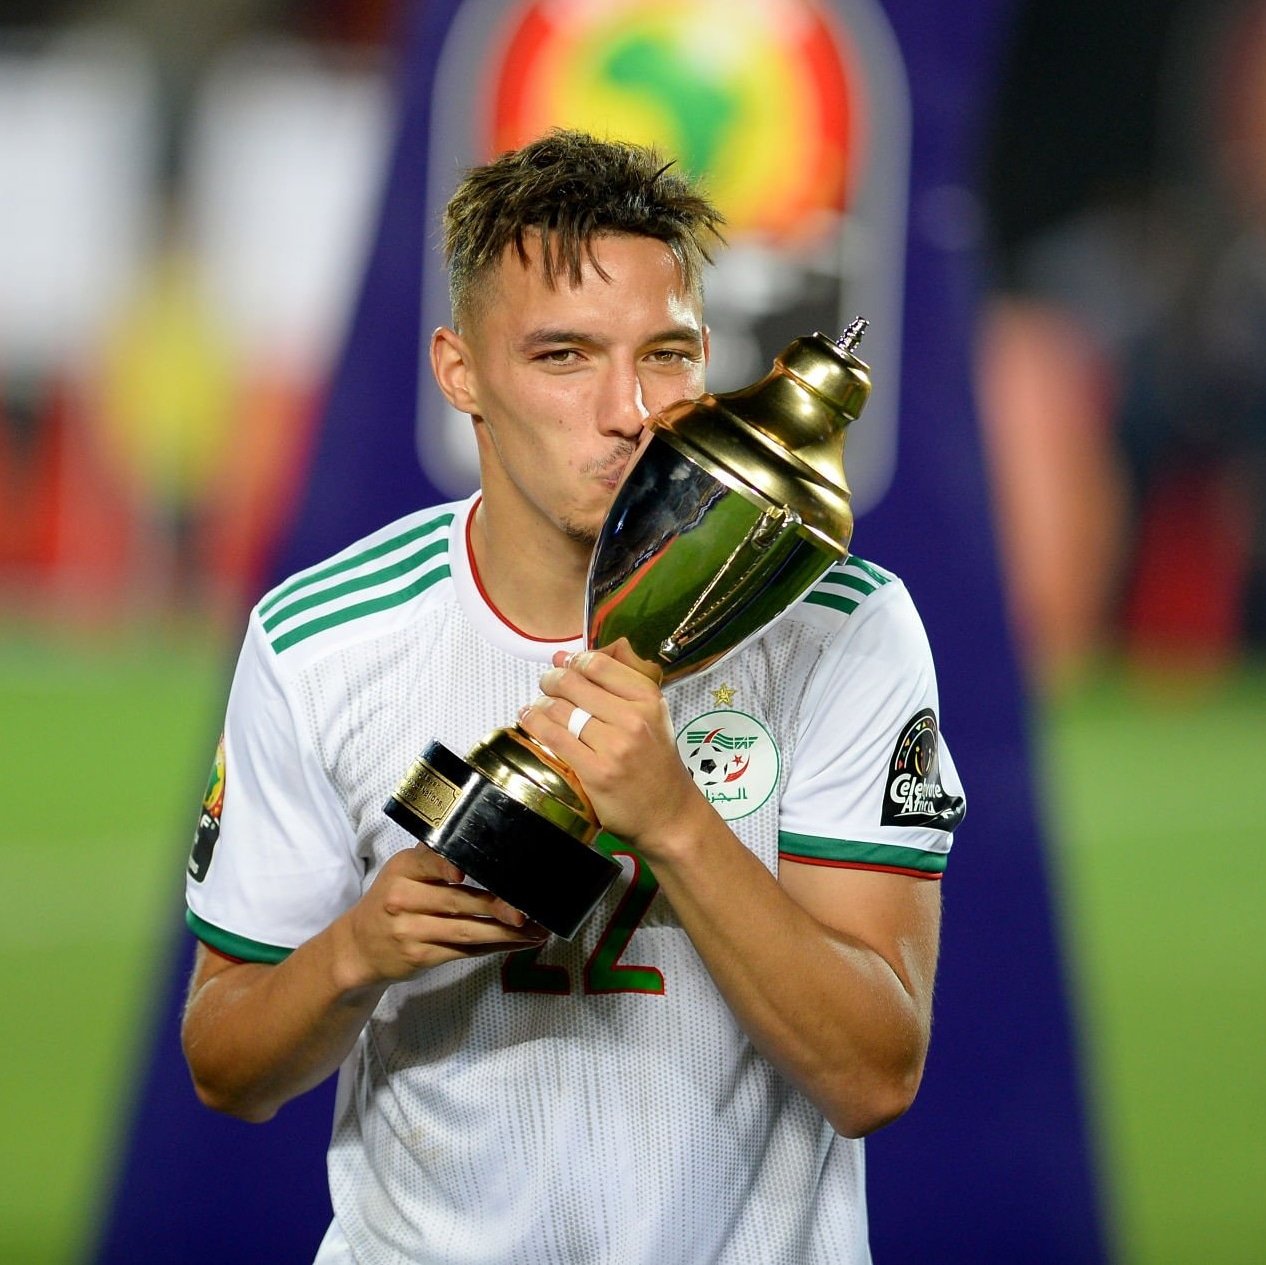 AFCON 2019: Algeria Midfielder Bennacer Wins MVP Award